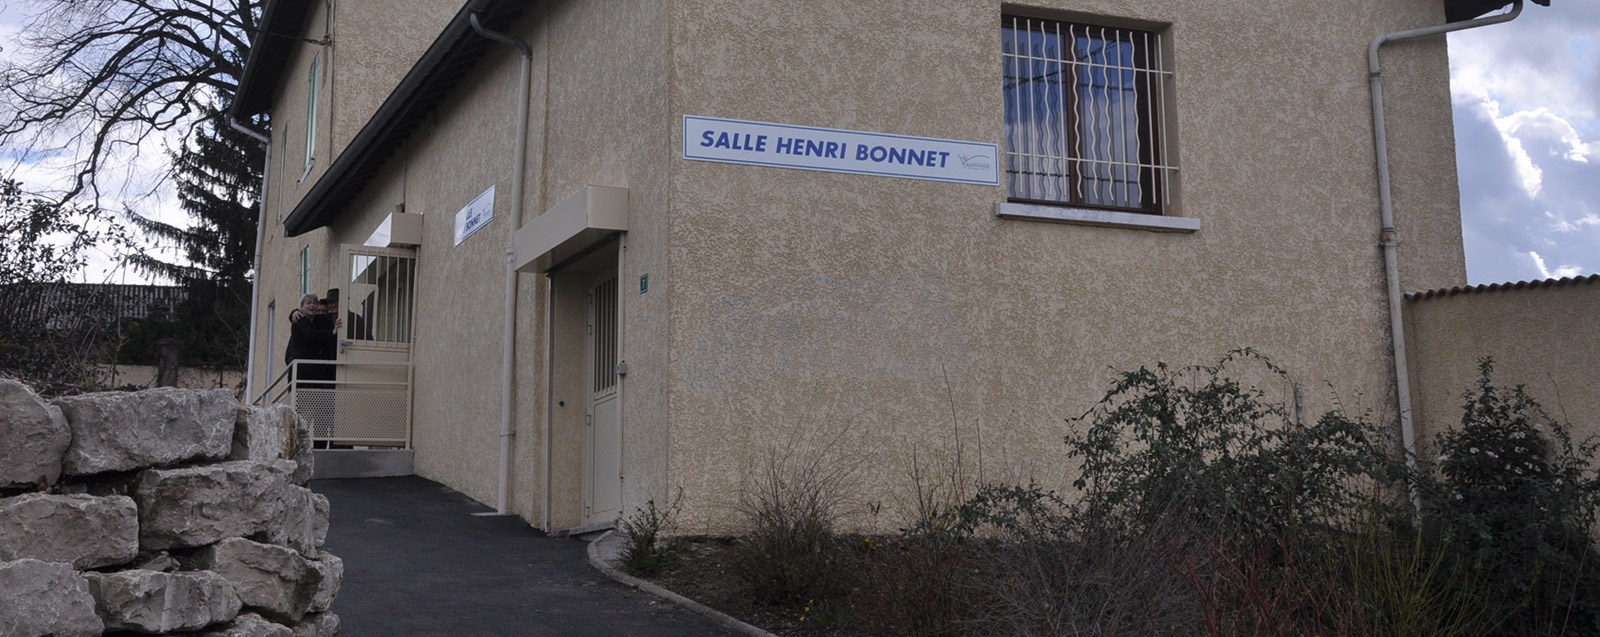 Salle Henri Bonnet Villefontaine